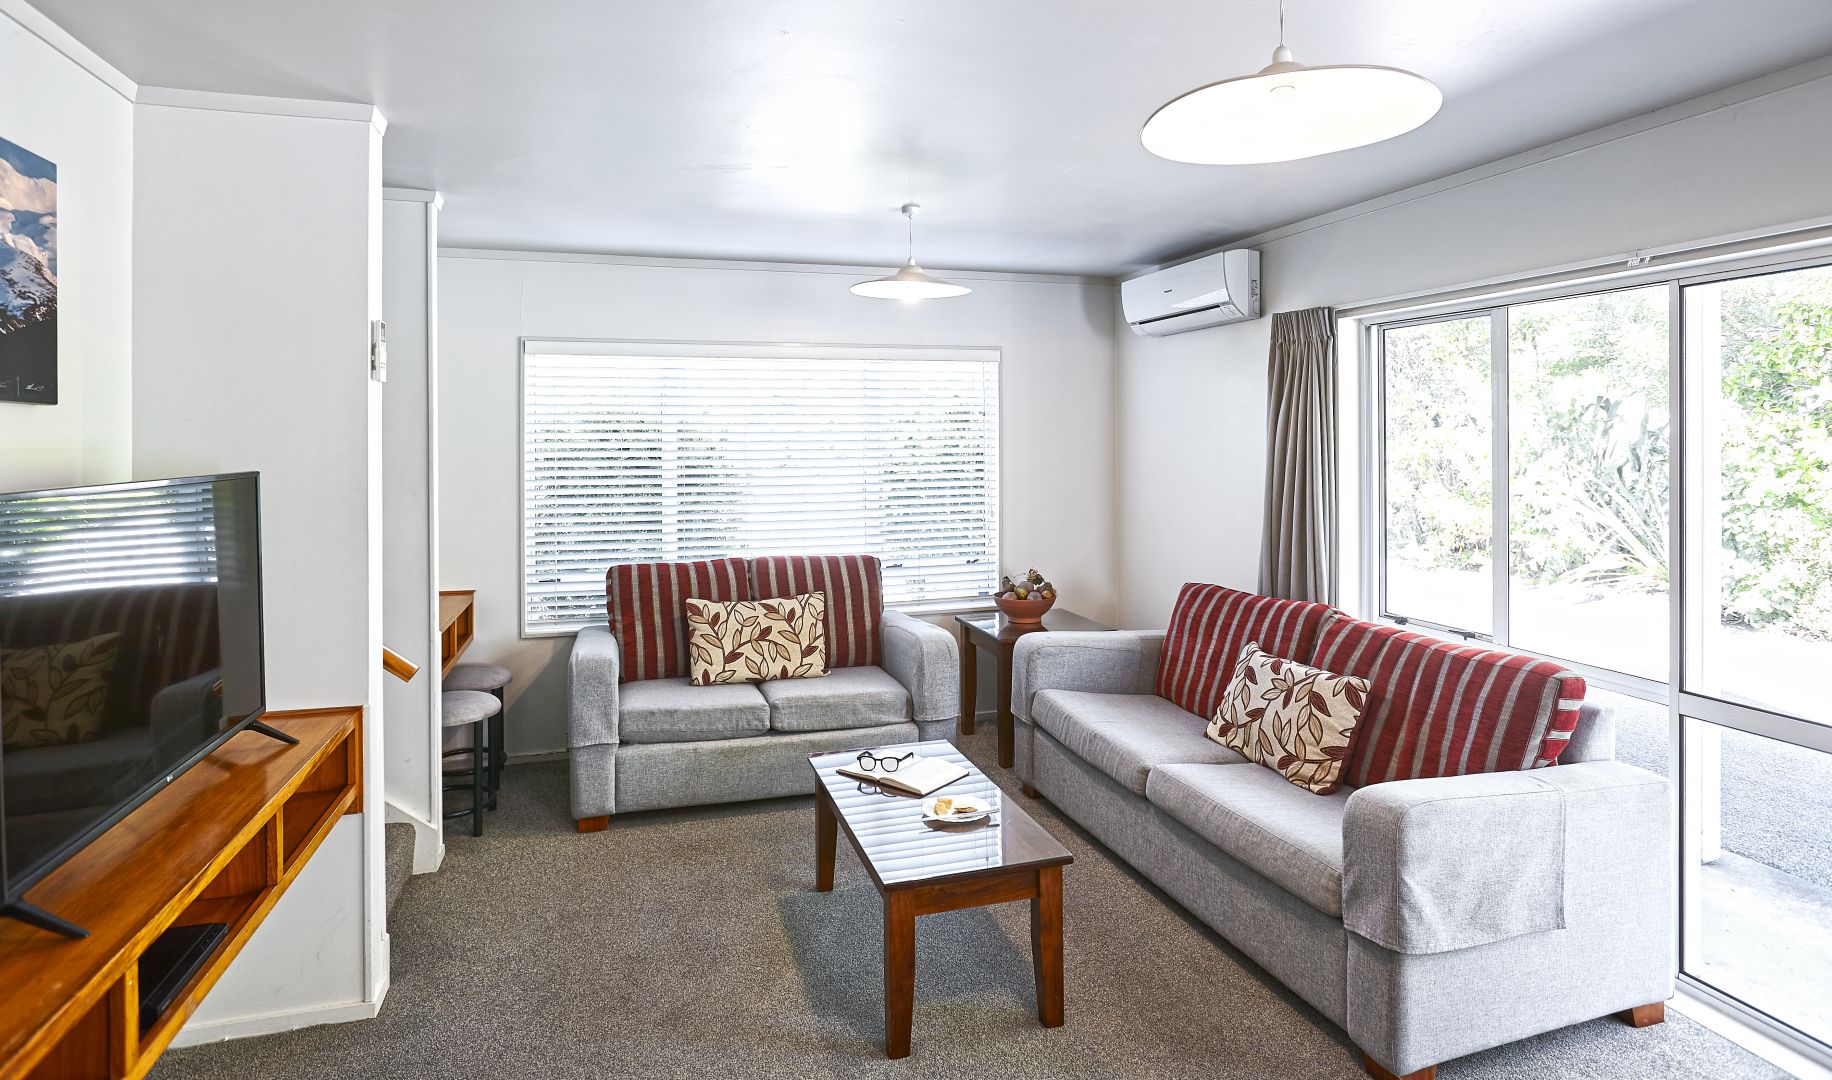 3 bedroom apartment with premium living room at Turangi Leisur Lodge near Tongariro.